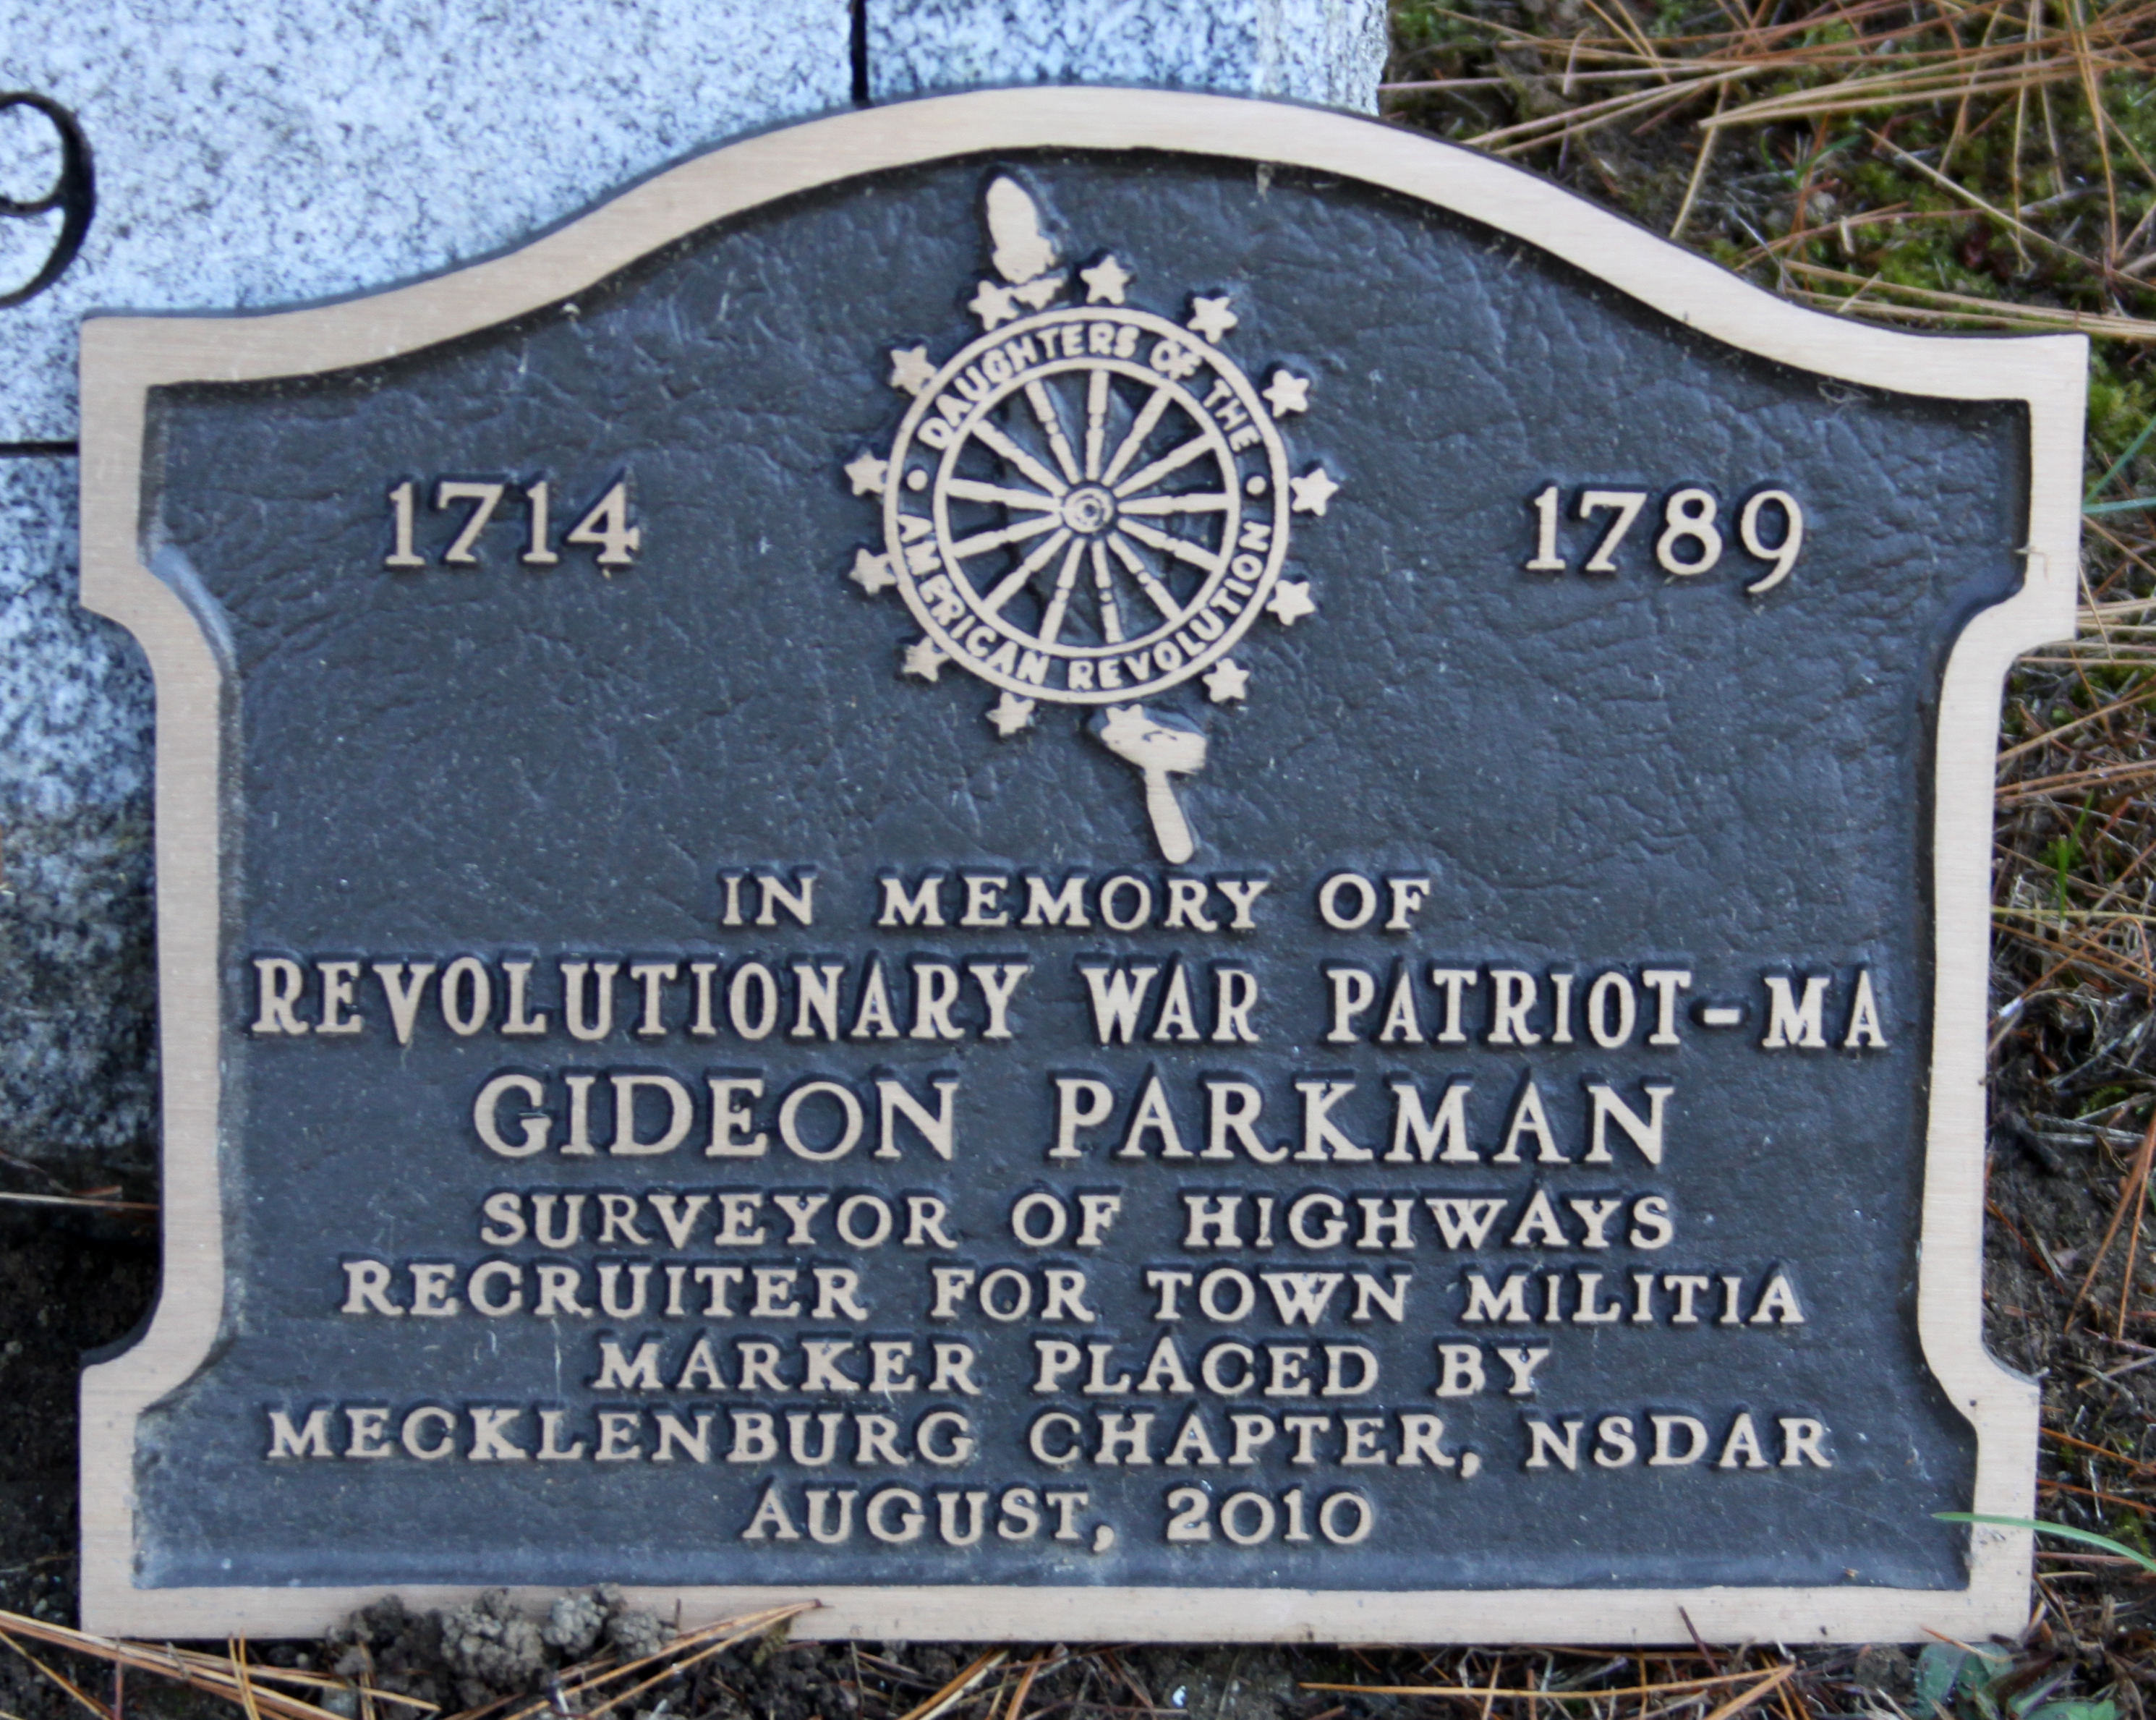 Gideon Parkman Revolutionary War Patriot 1714 1789 DAR Maine.jpg